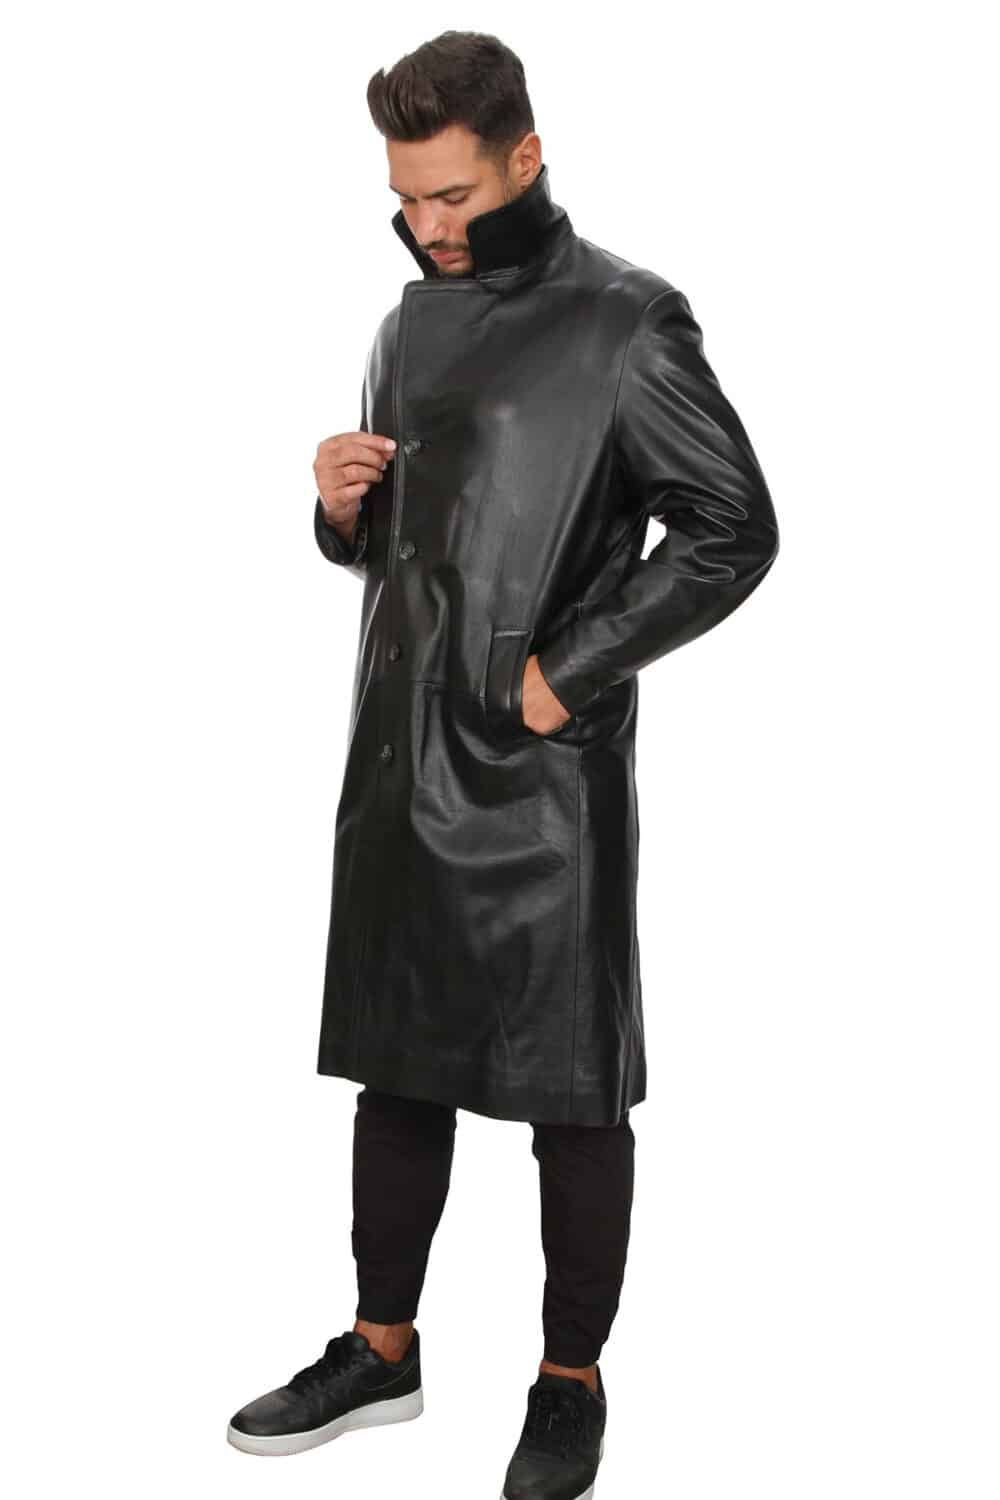 Black Leather Overcoat - Men's Petite Leather Trench Coat